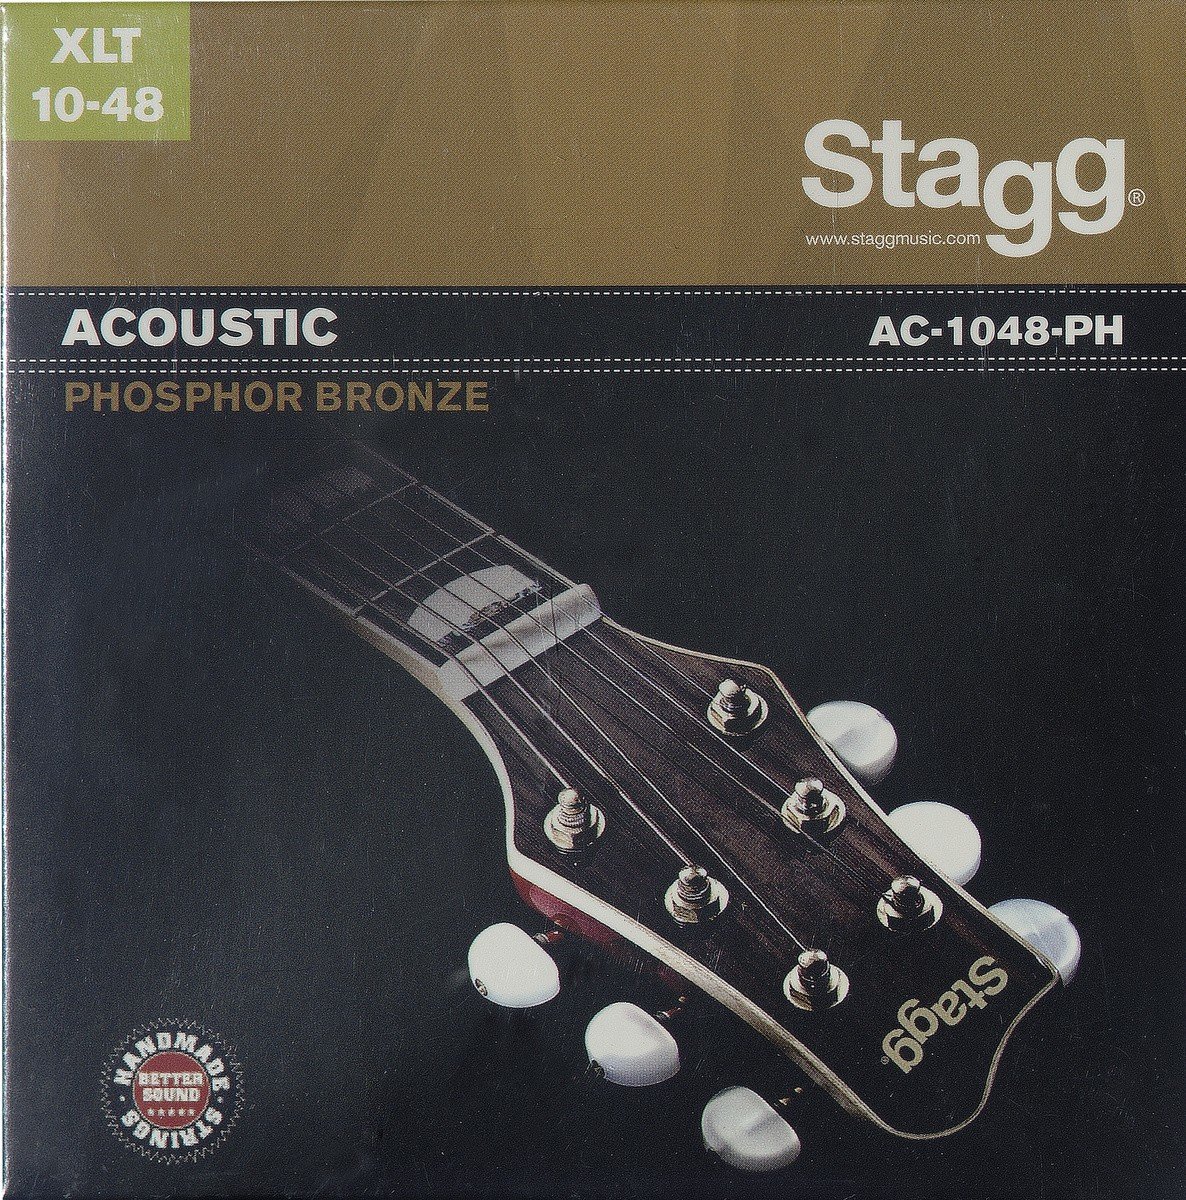 Stygos akustinei gitarai Stagg AC-1048-PH Phosphor Bronze 0.010 - 0.048  kaina | pigu.lt